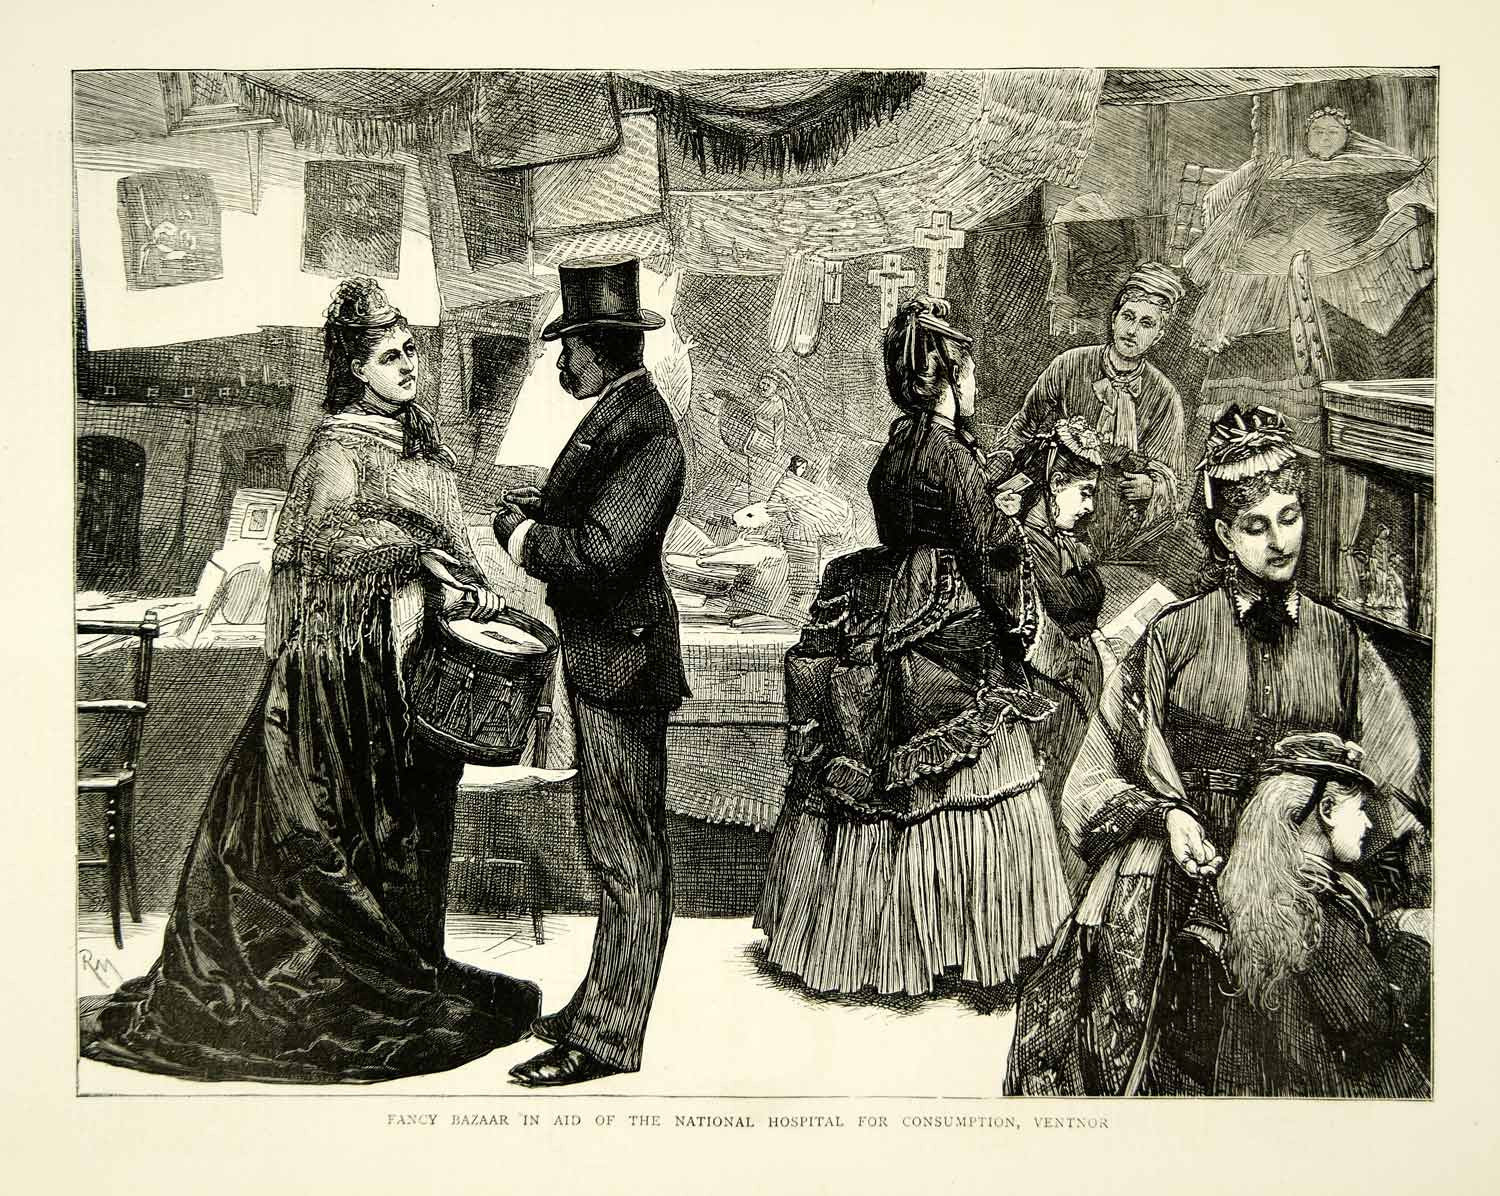 1871 Wood Engraving Art Isle Wight England Victorian Bazaar Women Fashion YTG2 - Period Paper
